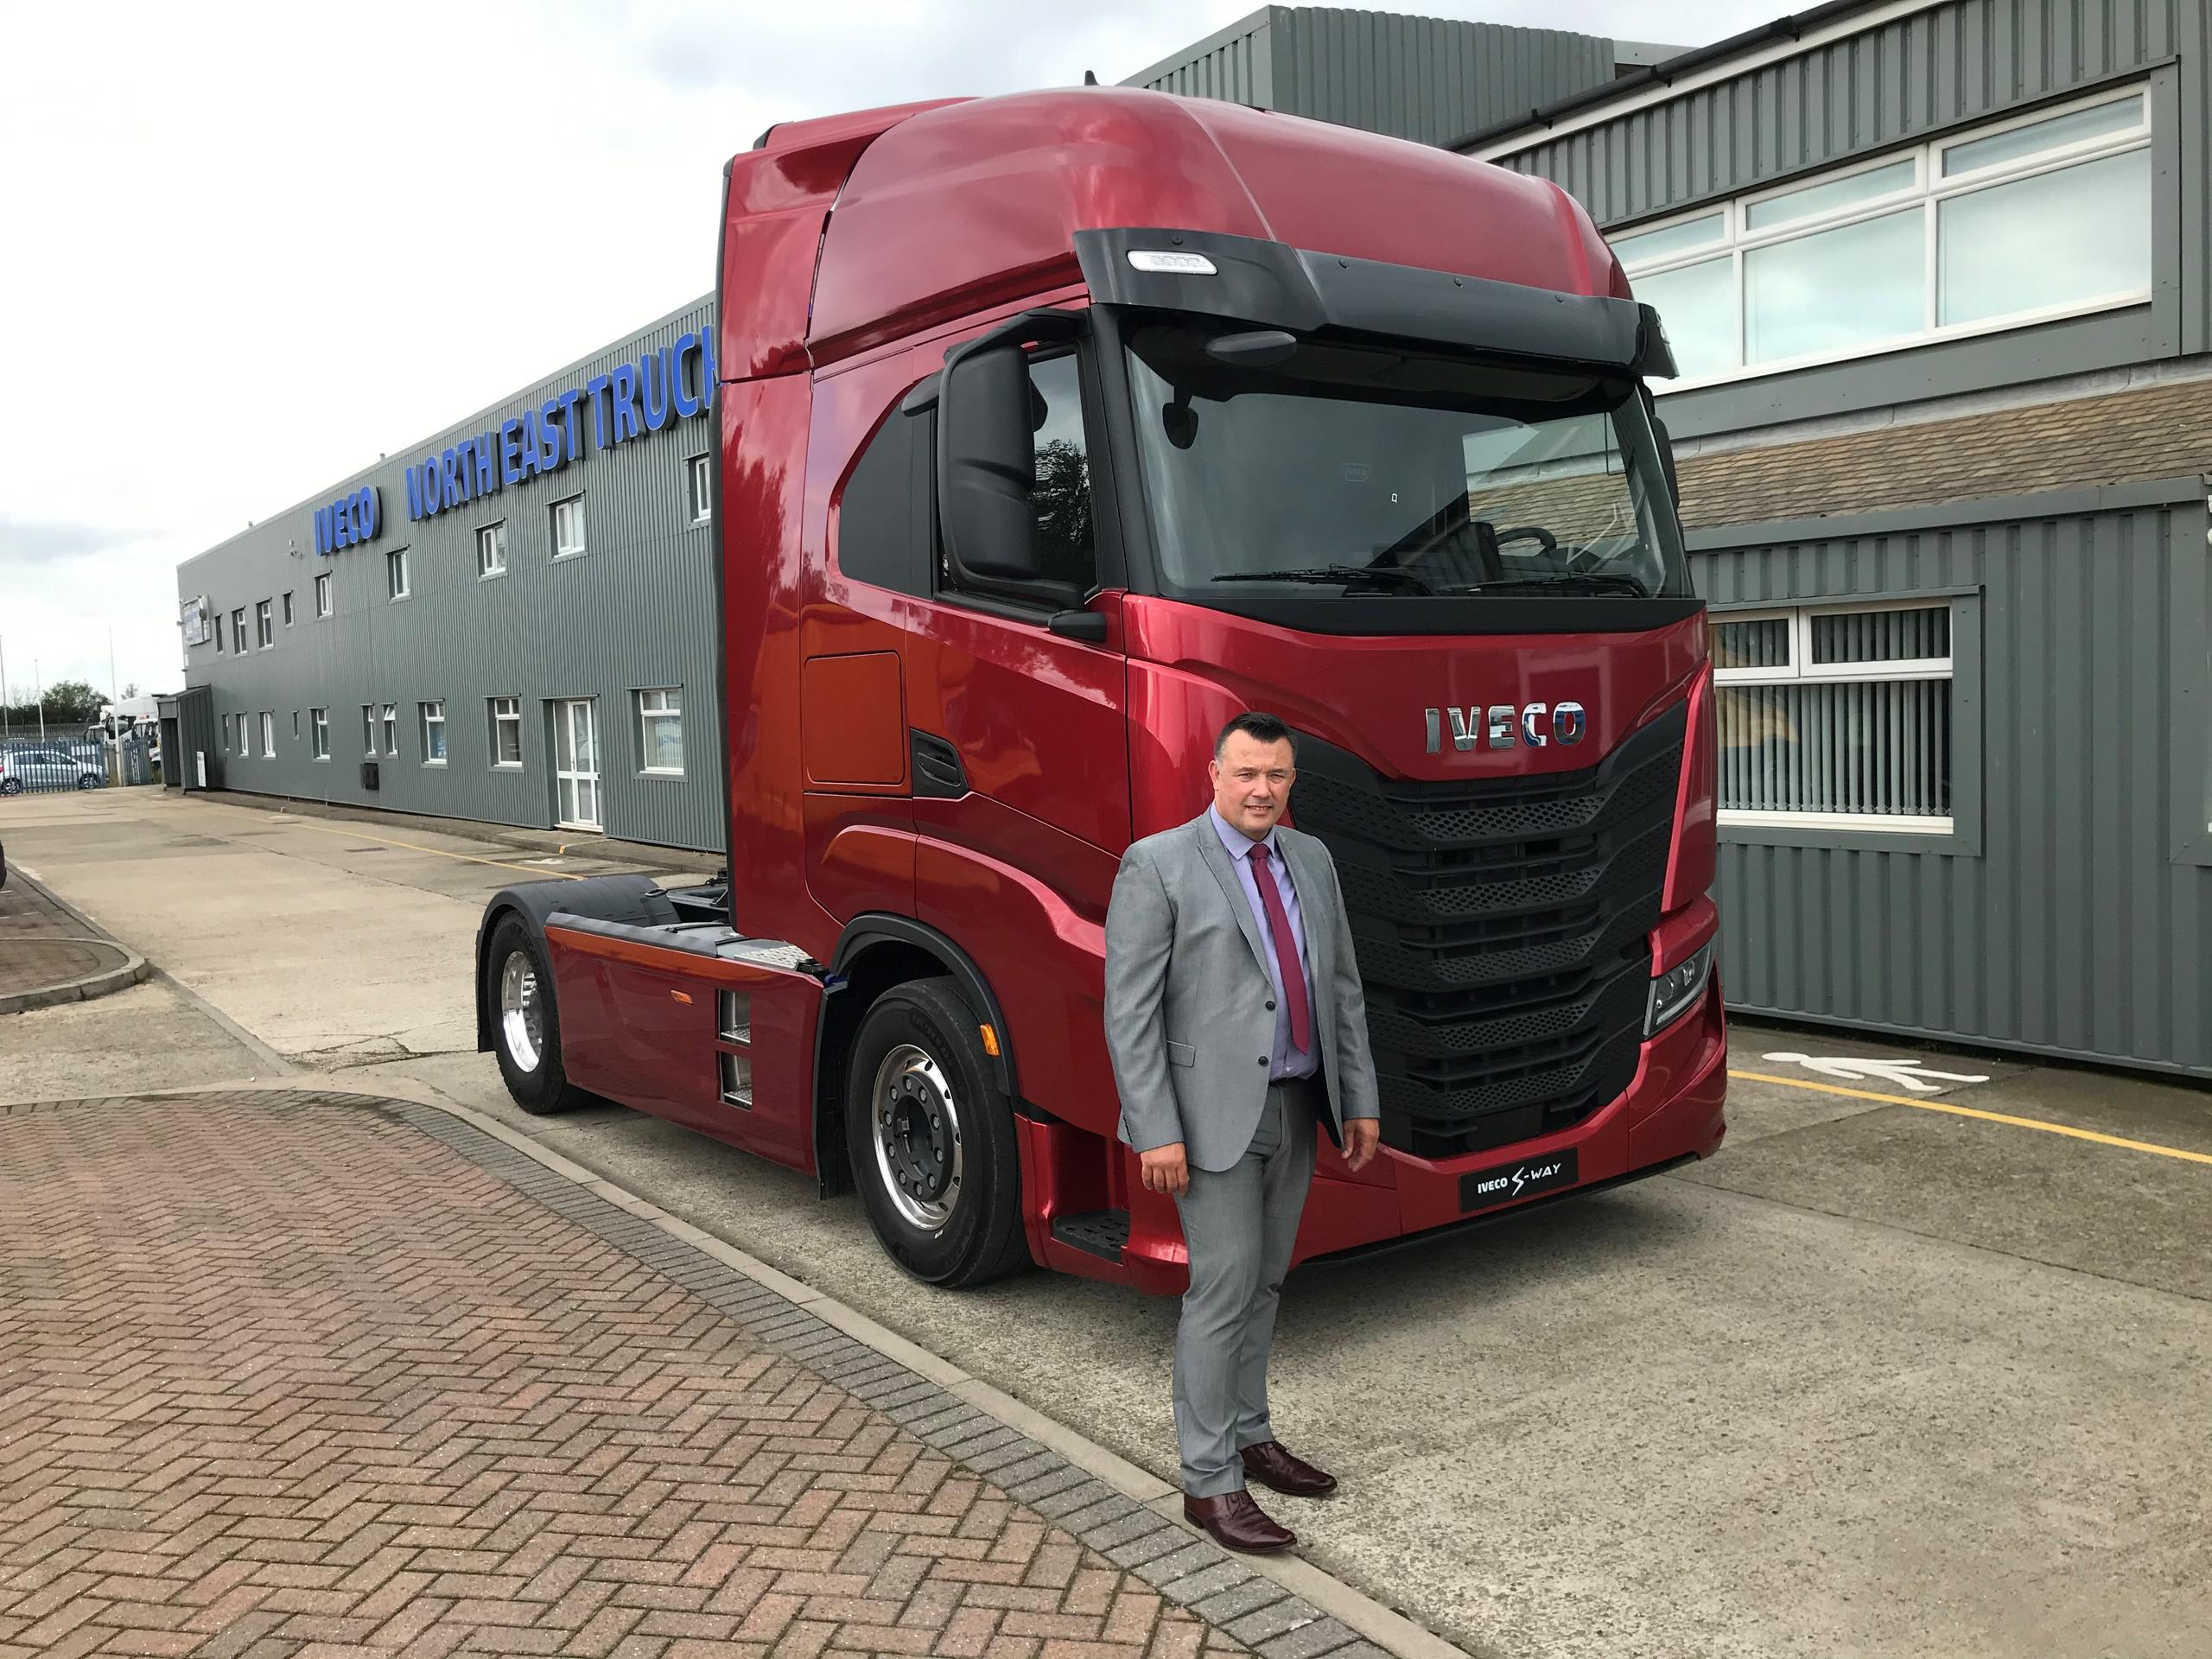 Fleet Business Development Manager joins North East Truck and Van